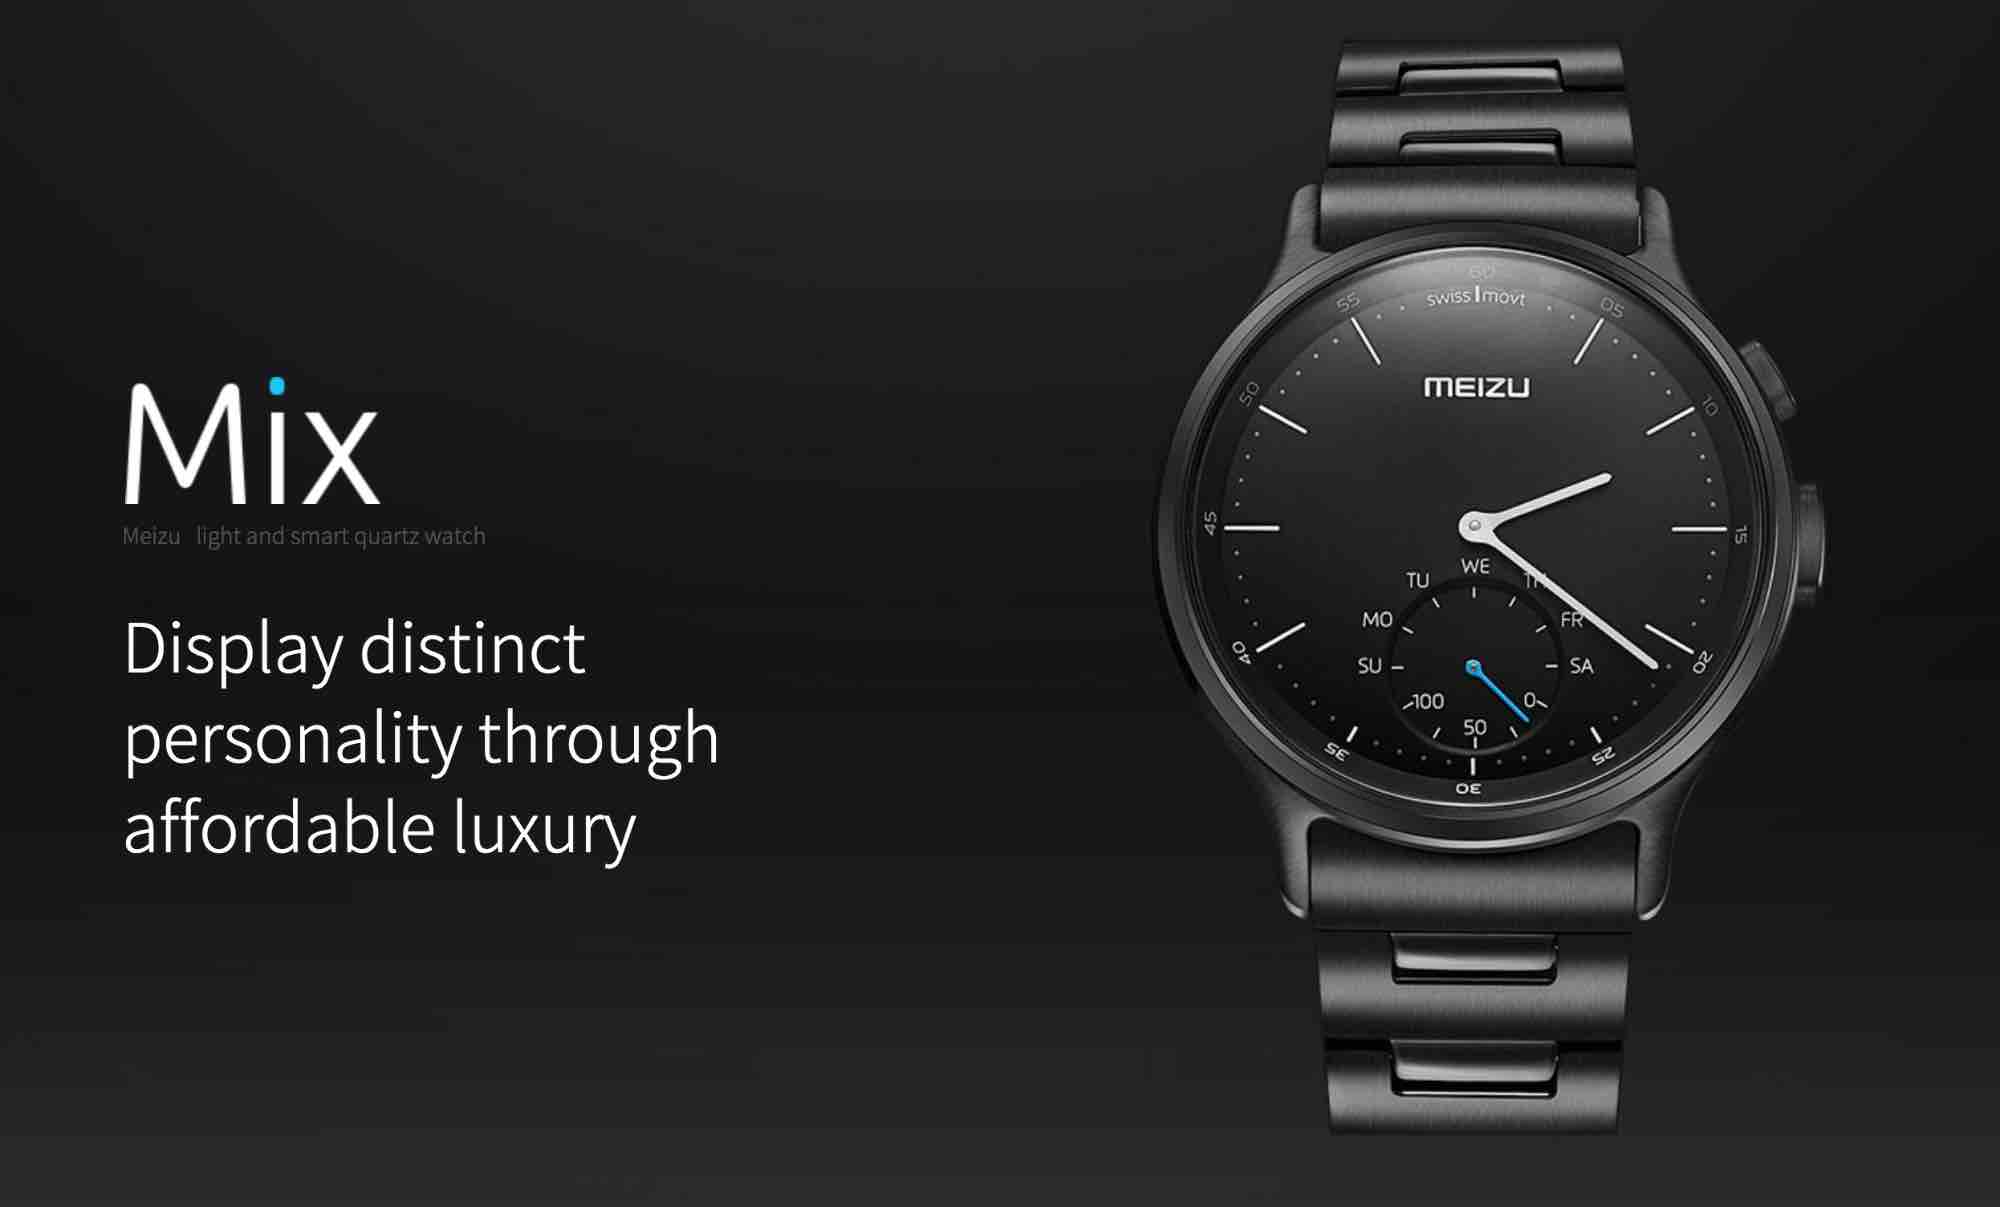 Meizu Smart Watch Mix